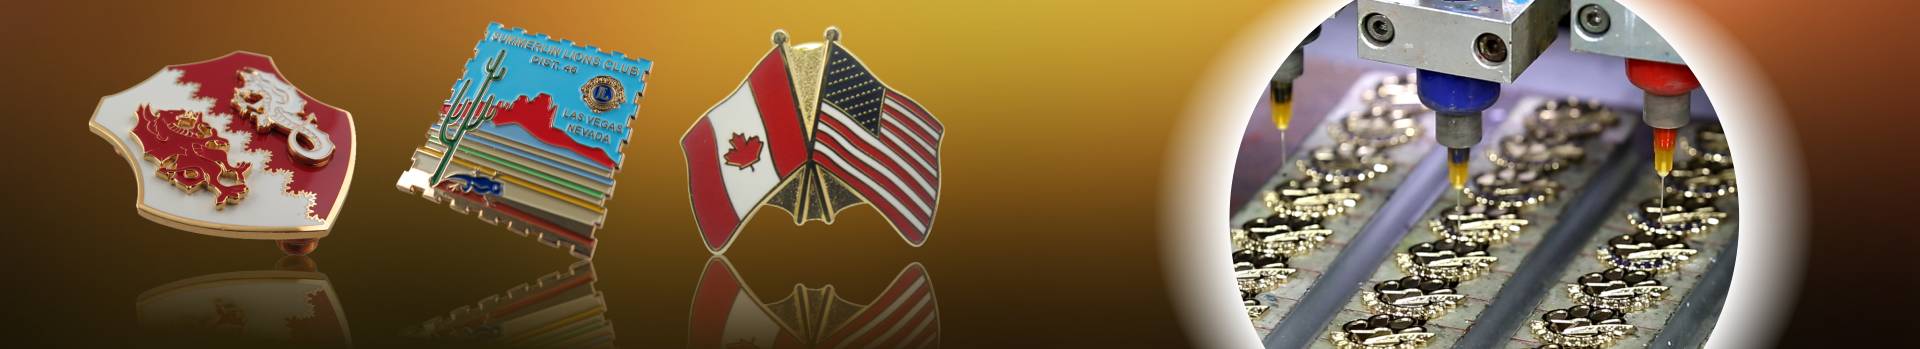 US Federal Air Marshal Badge